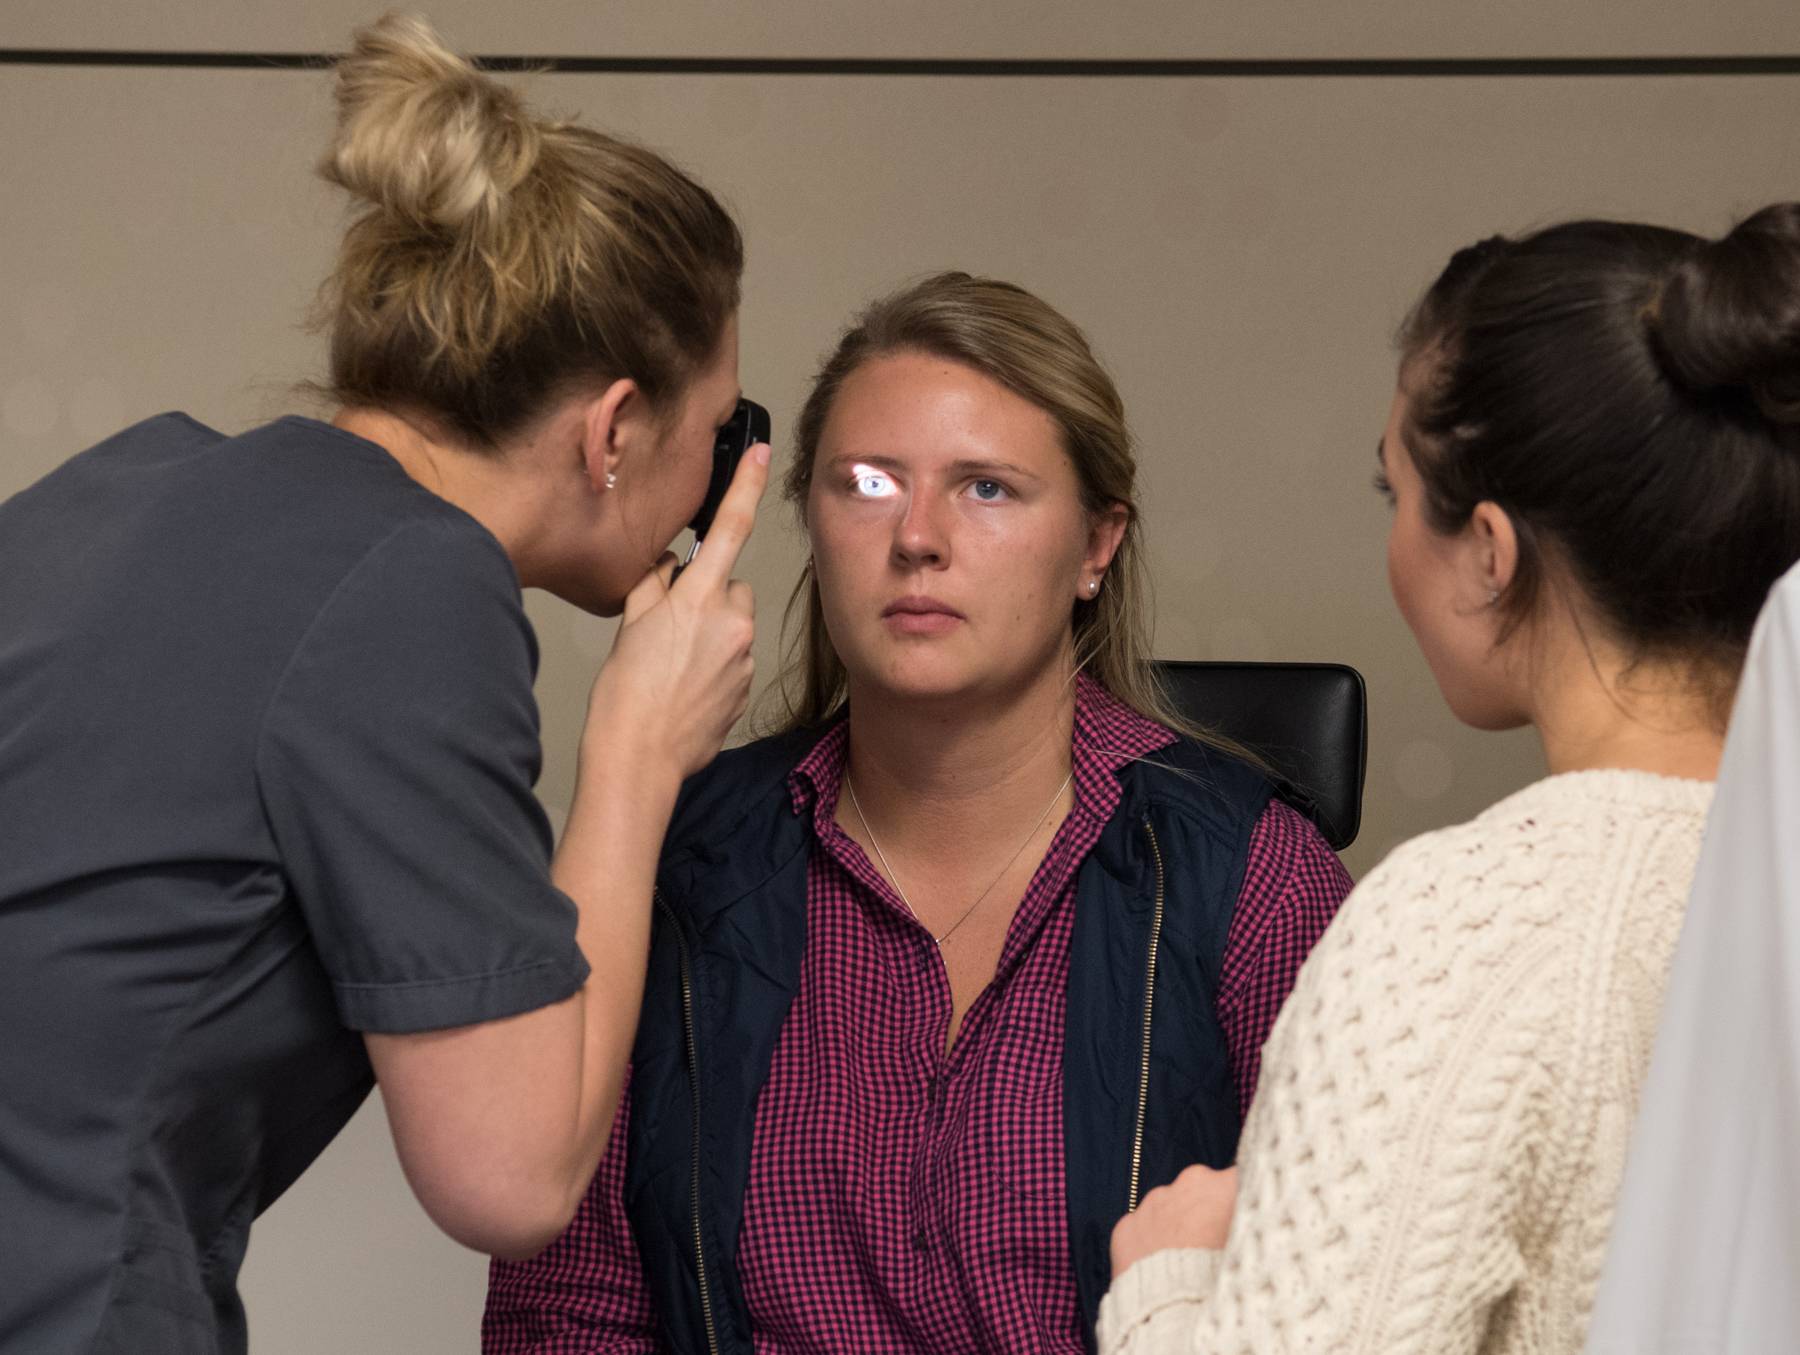 Student performing an eye exam